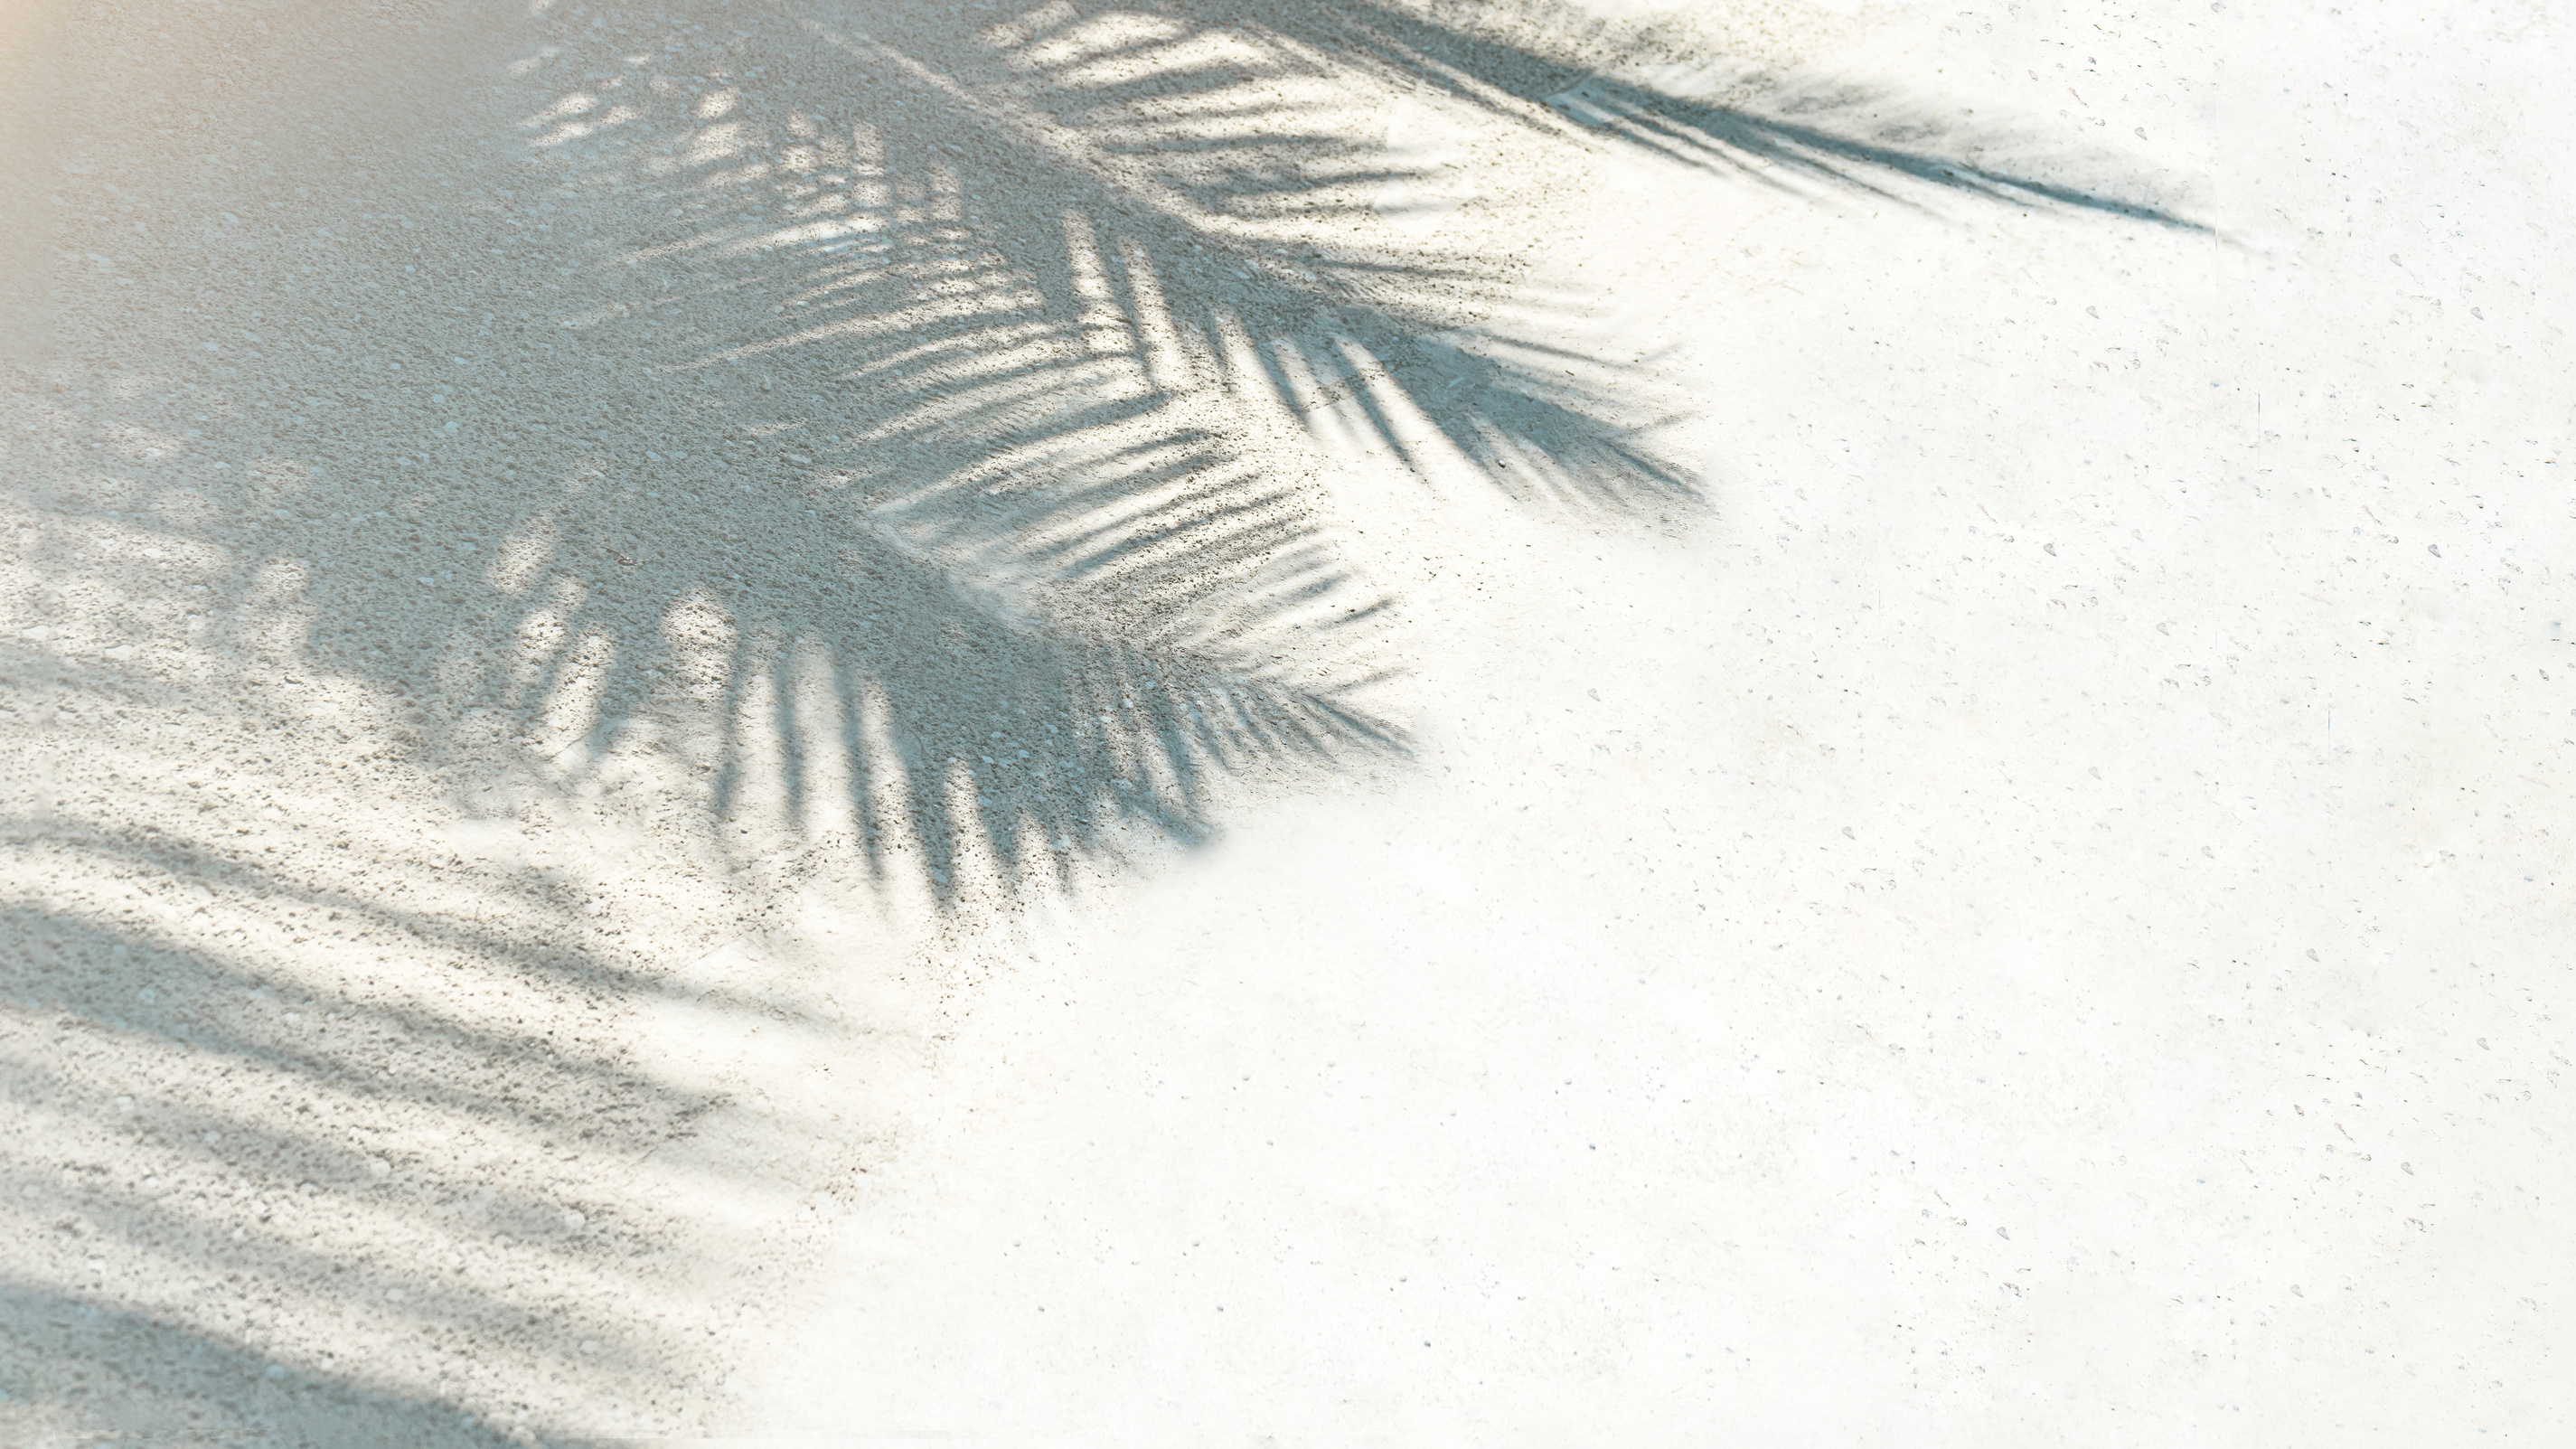 Palm Leaf Shadows on the Sand Copy Space